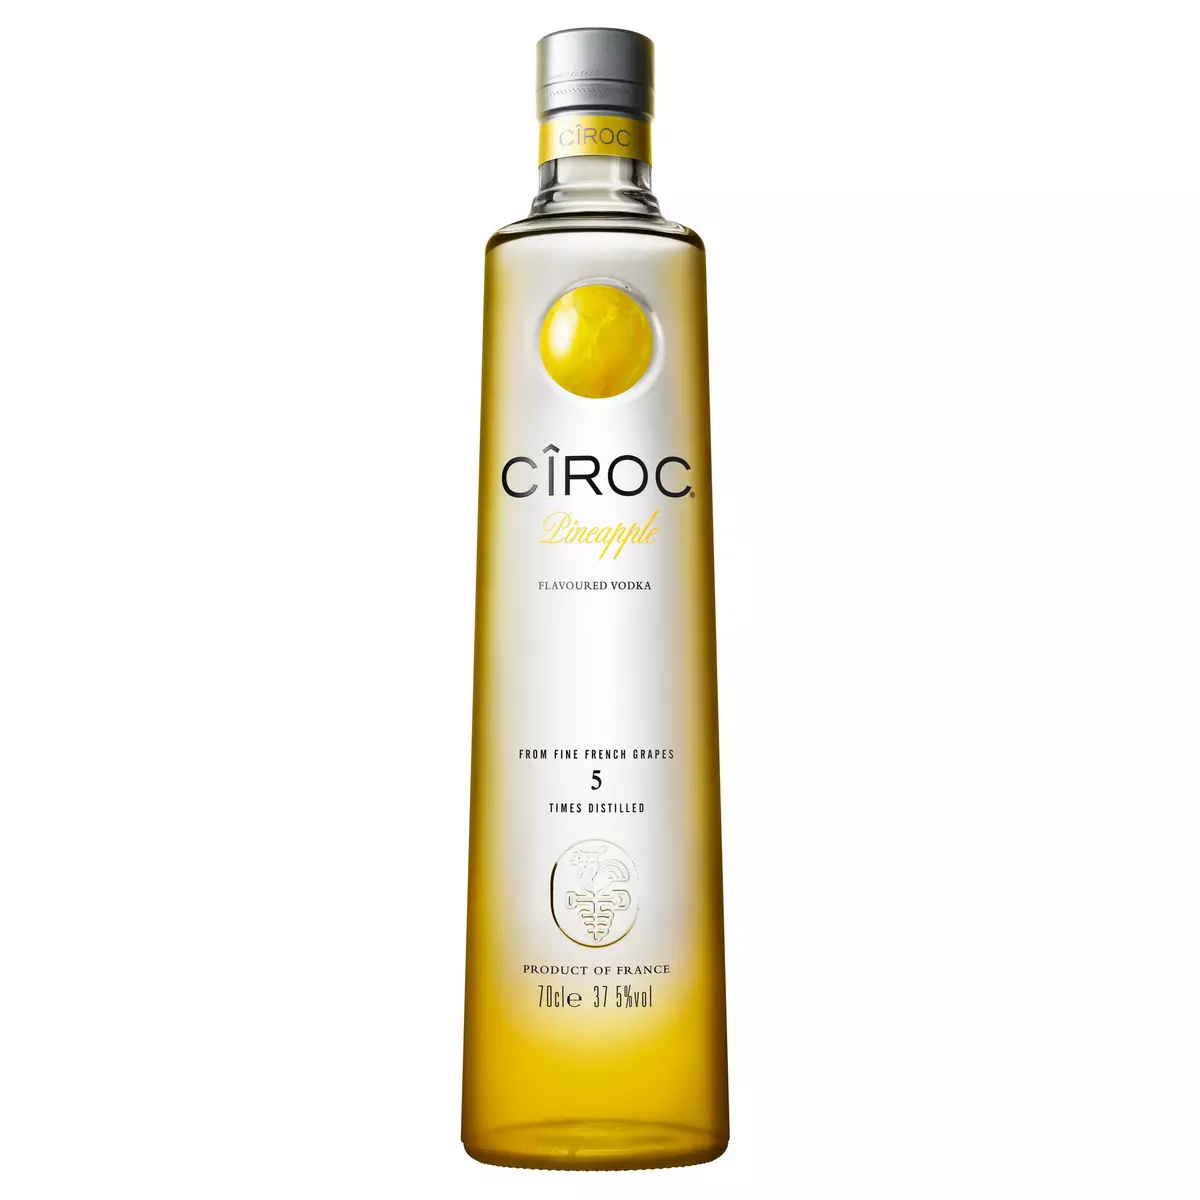 CIROC Vodka aromatisée à l'ananas 37.5% 70cl